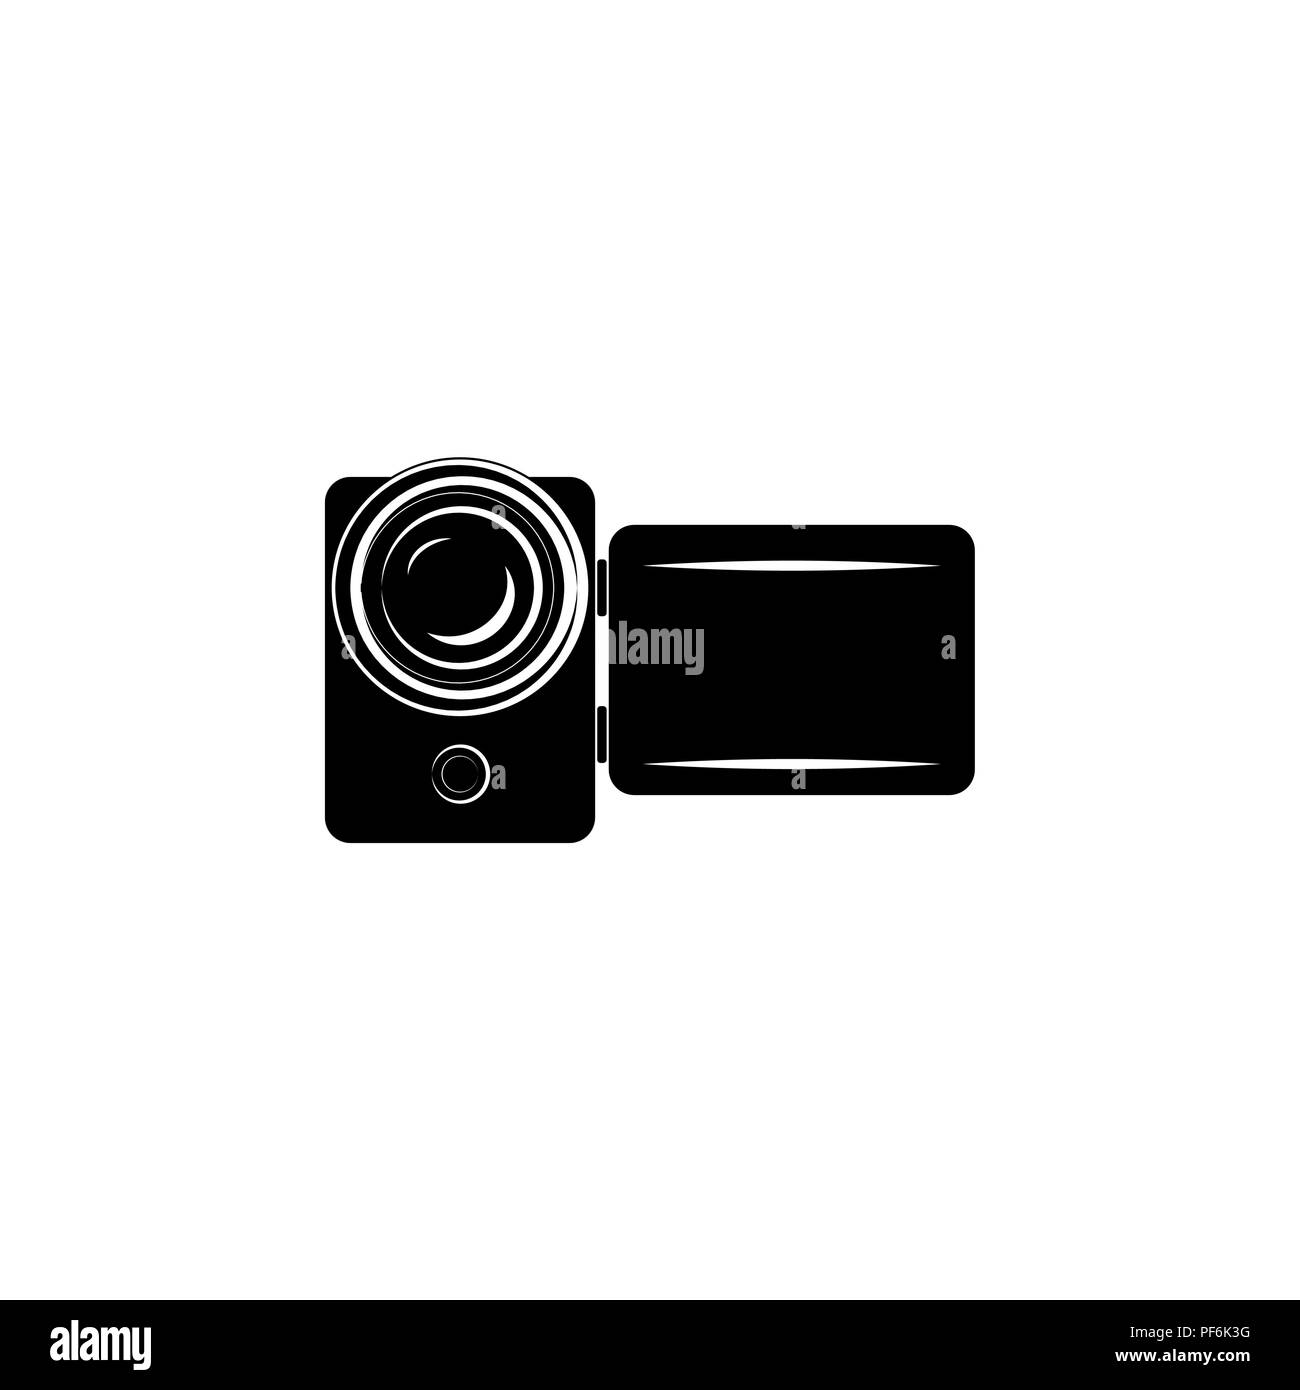 Camcorder icon. Videocamera icon black on white background Stock Vector